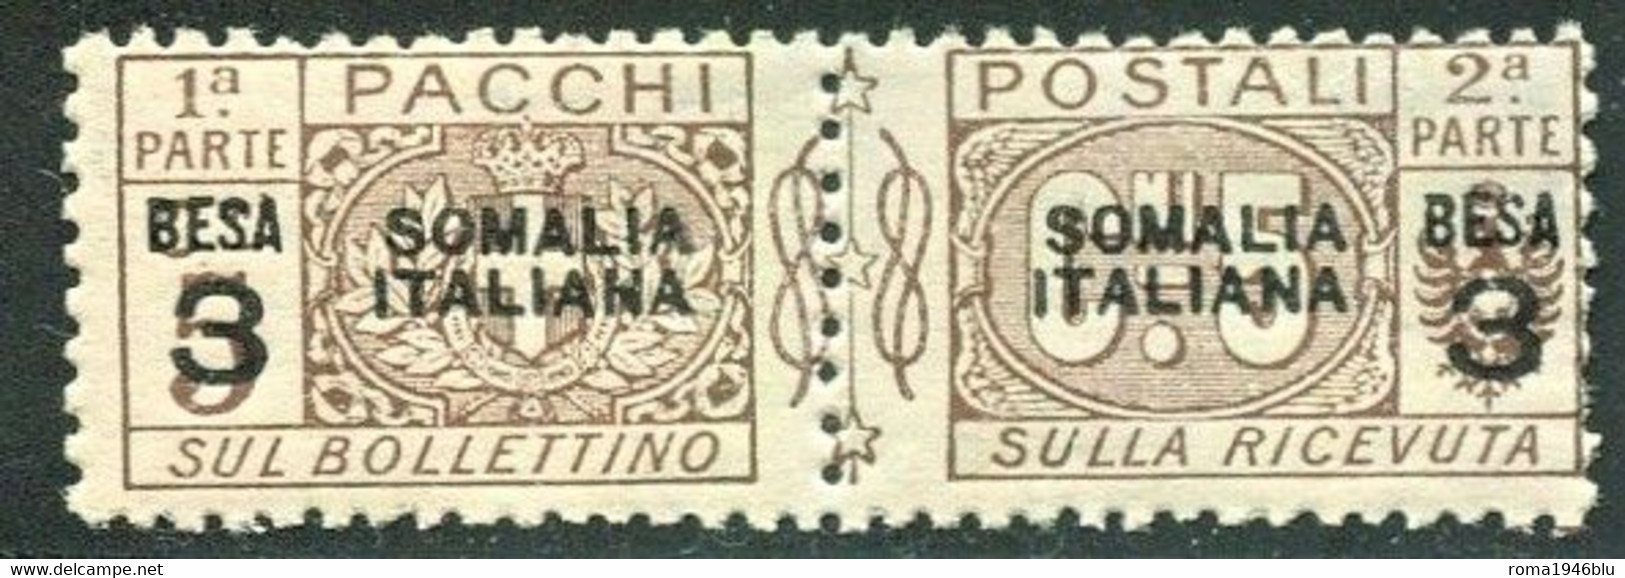 SOMALIA 1923 PACCHI POSTALI 3 B SU 5 C. SASSONE N.21  ** MNH - Somalia